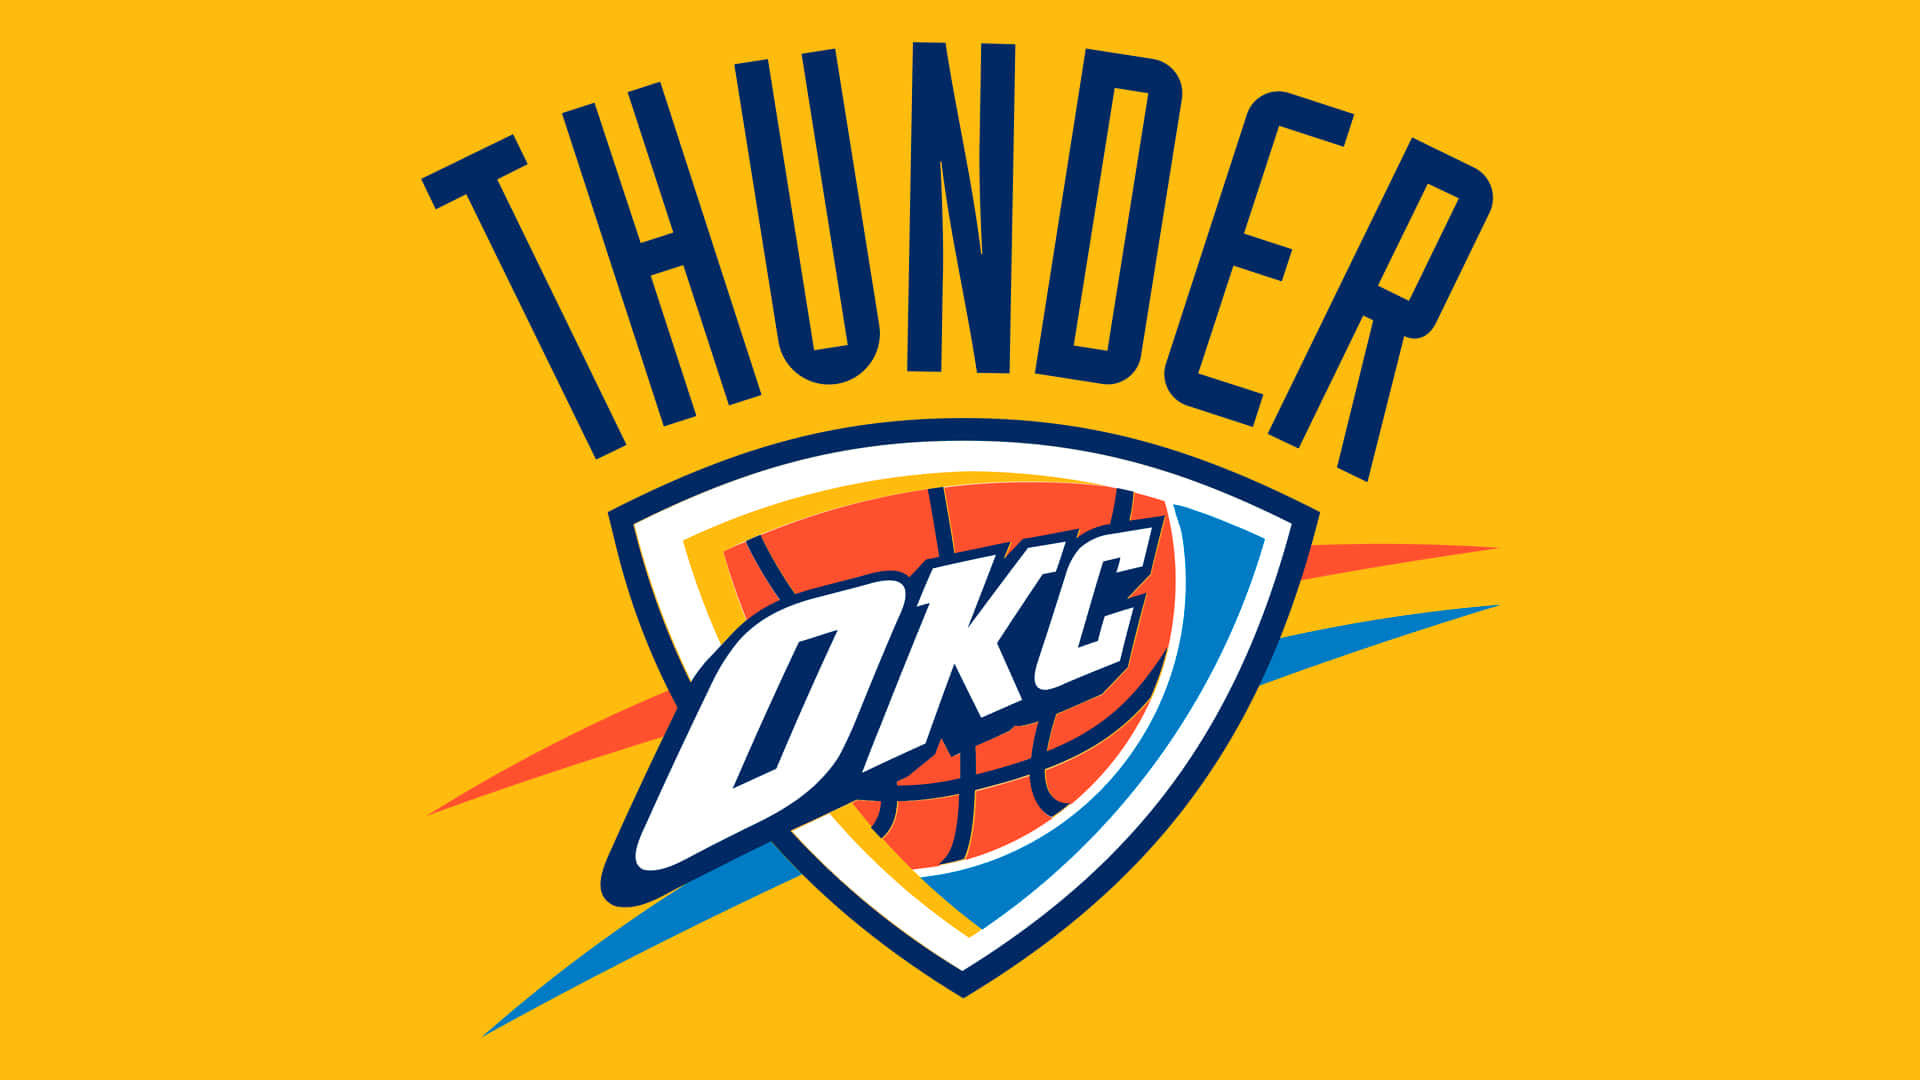 Logotipodel Equipo De La Nba, Okc Oklahoma City Thunders. Fondo de pantalla